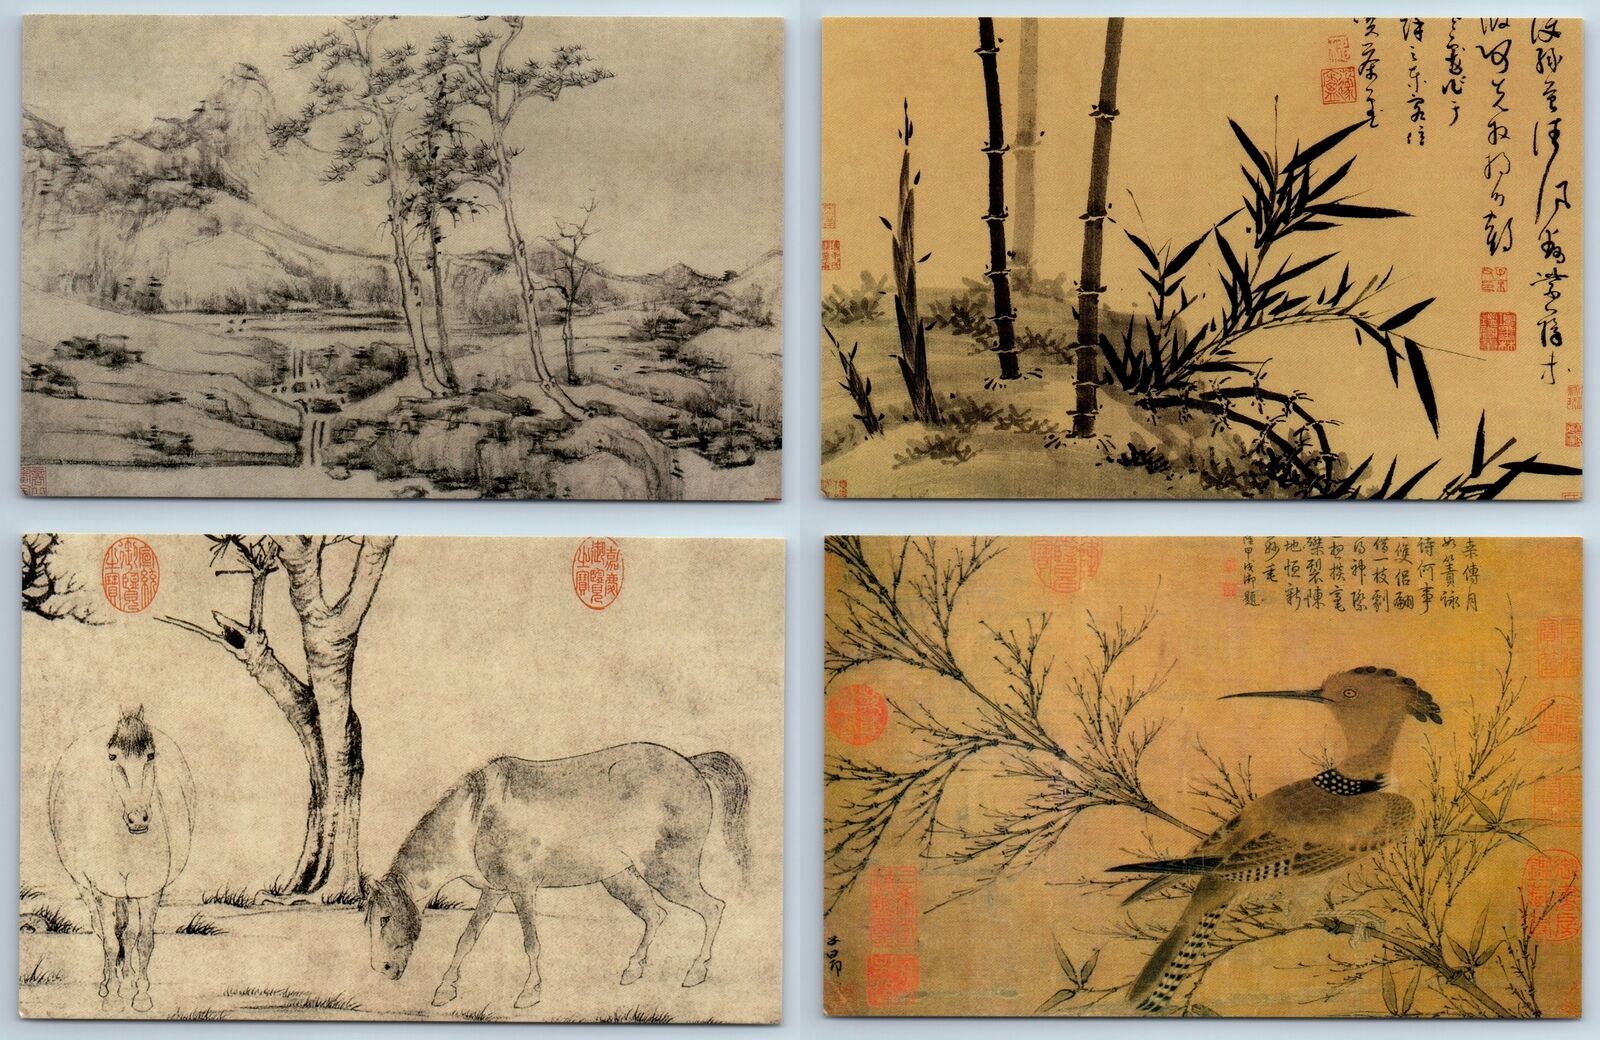 CHINESE ART YUAN 元朝 Post Cards in Folder 王蒙 倪瓒 吴镇 黃公望 China LOT of 10 pcs